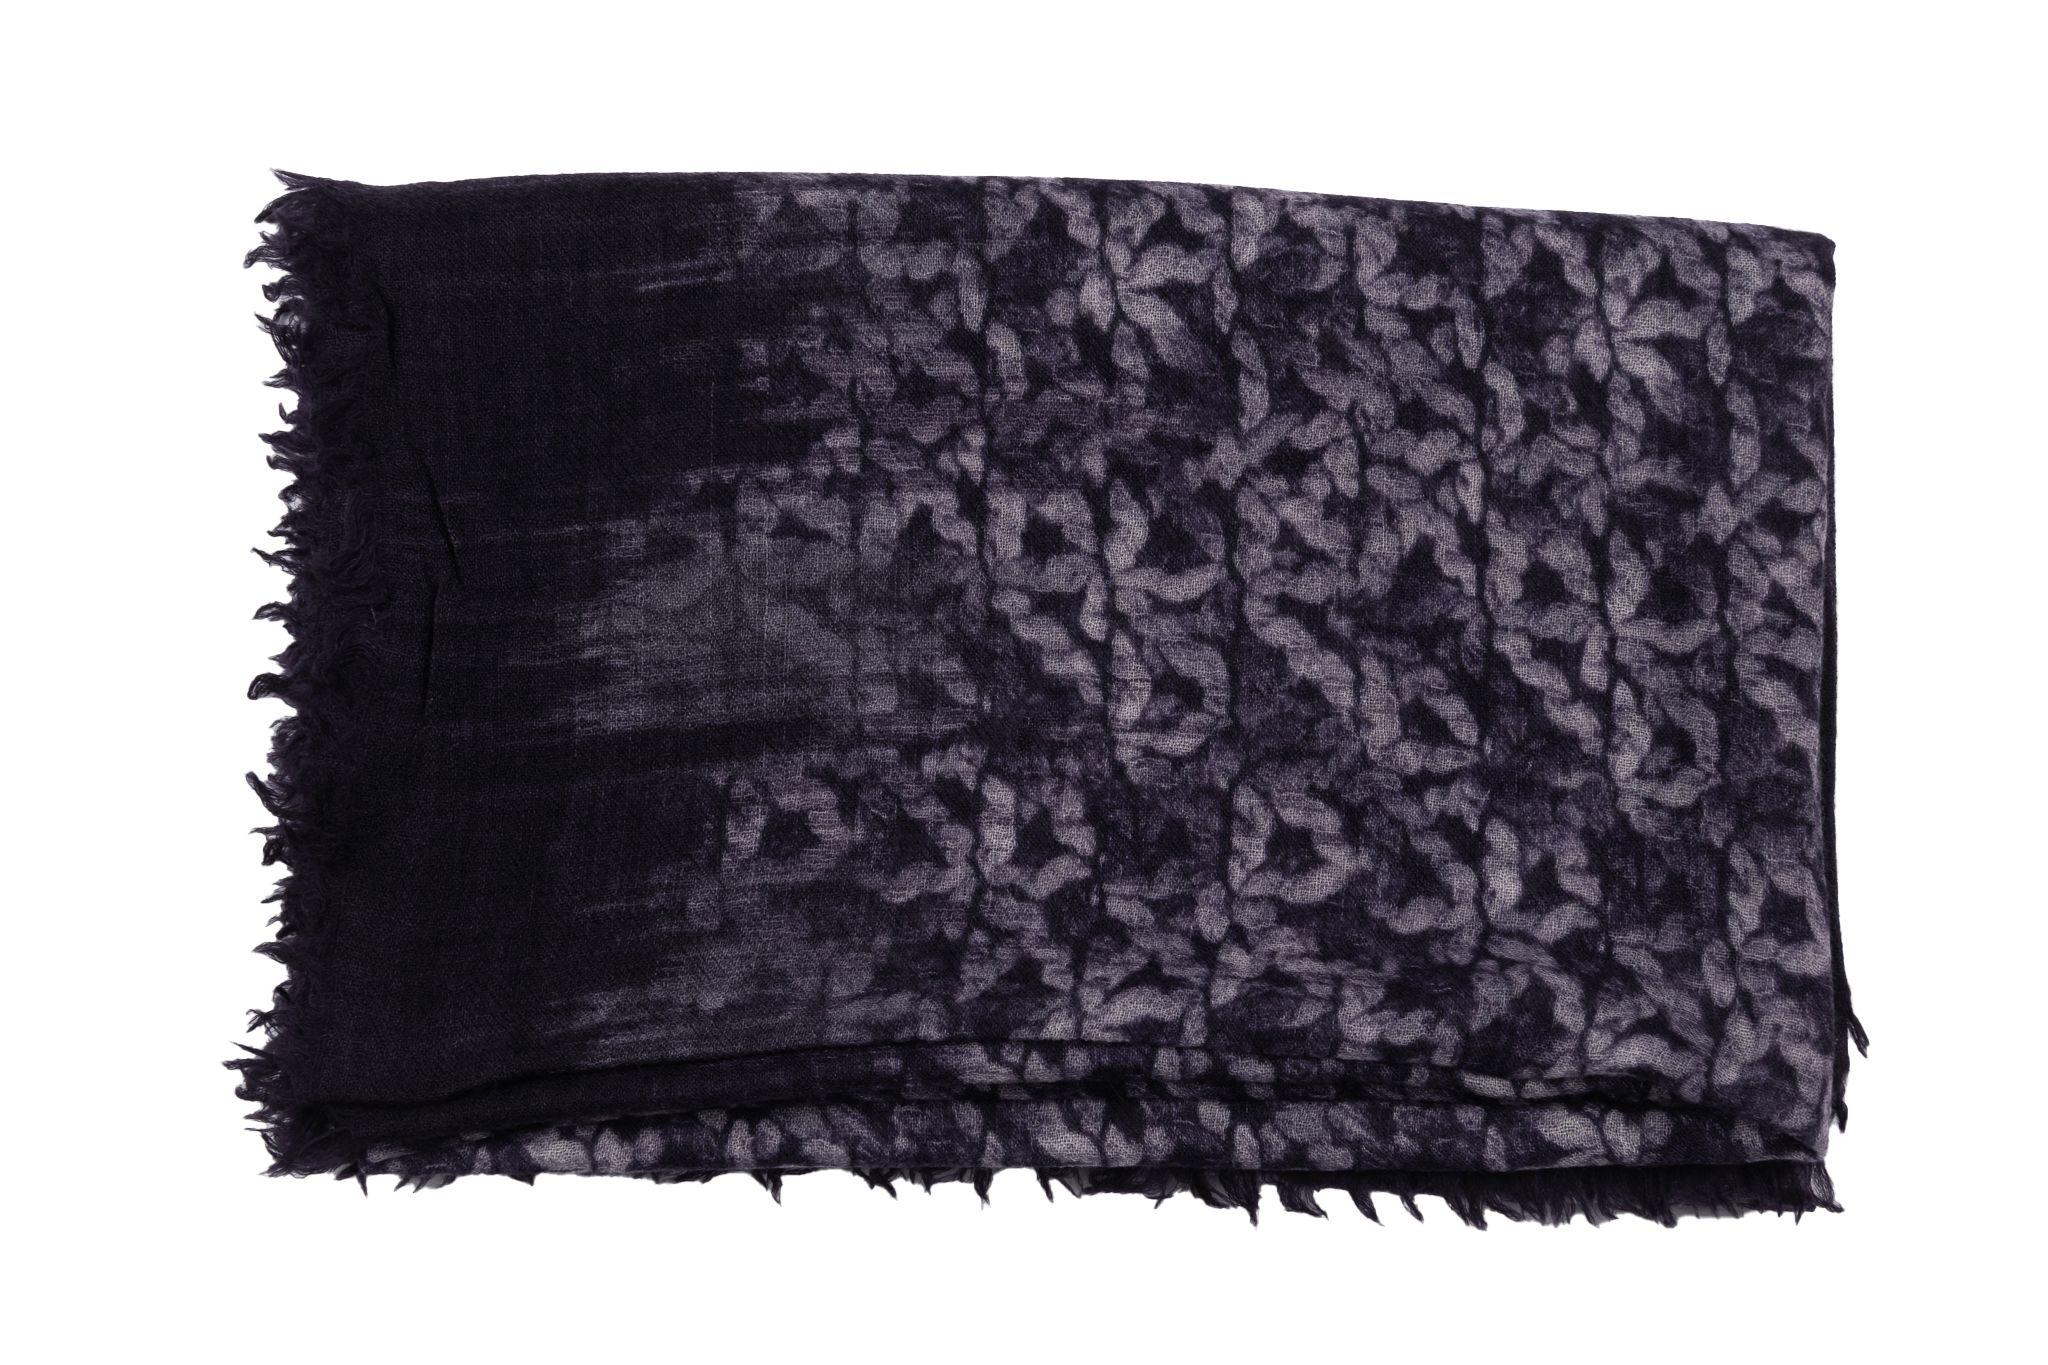 Chanel new multi logo purple cashmere shawl. Very light and delicate.